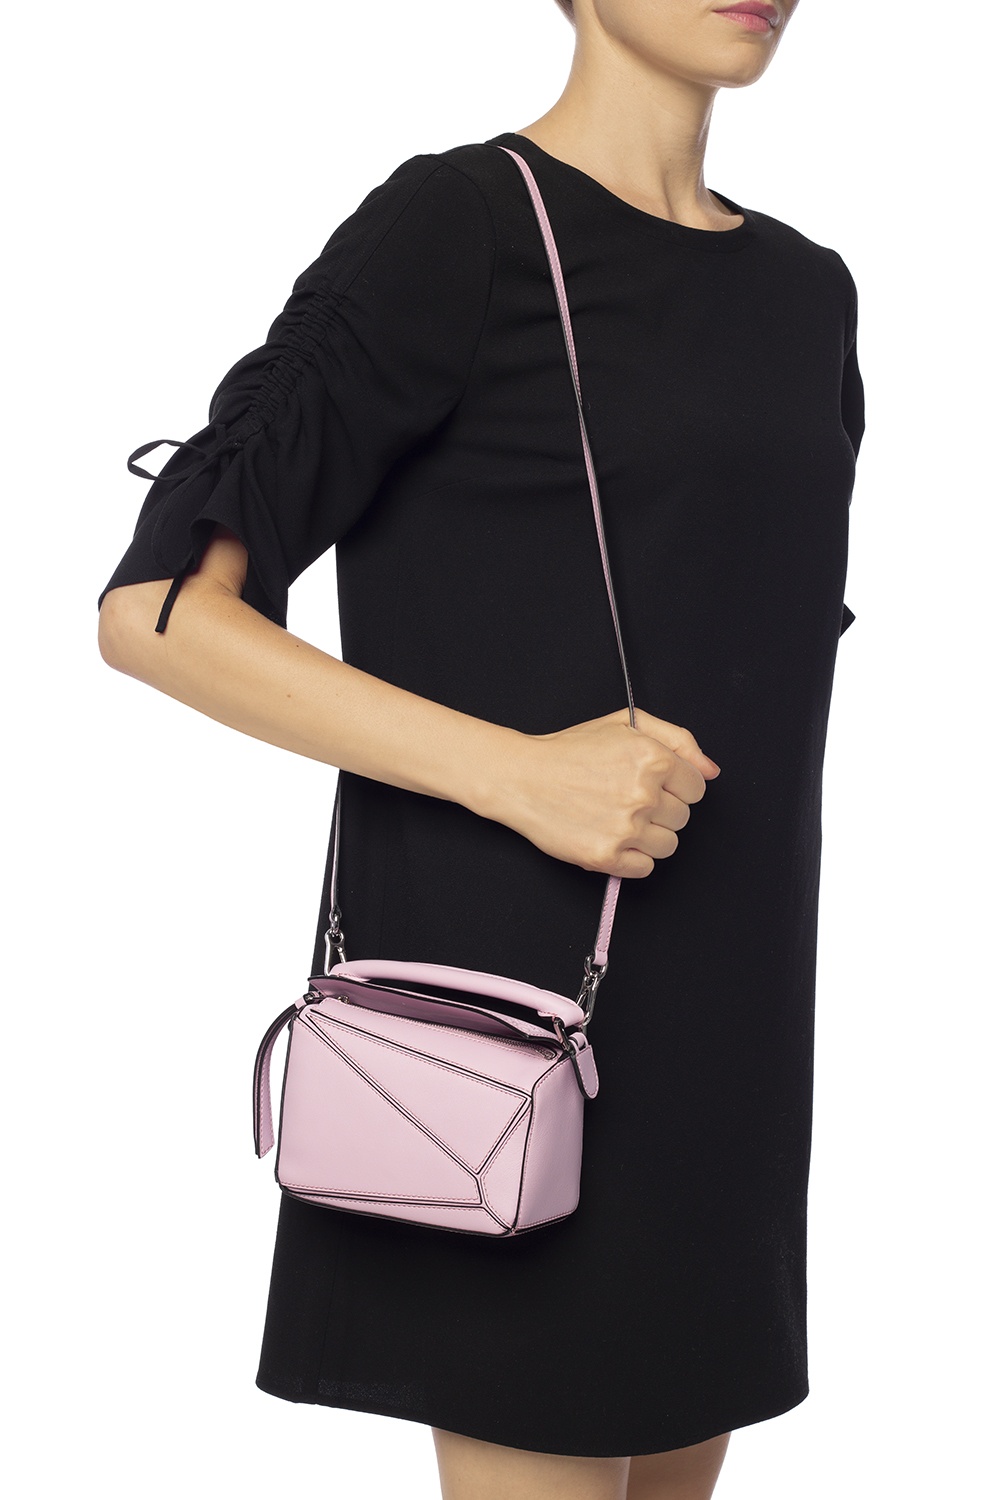 Loewe Mini Puzzle Bag in Pink